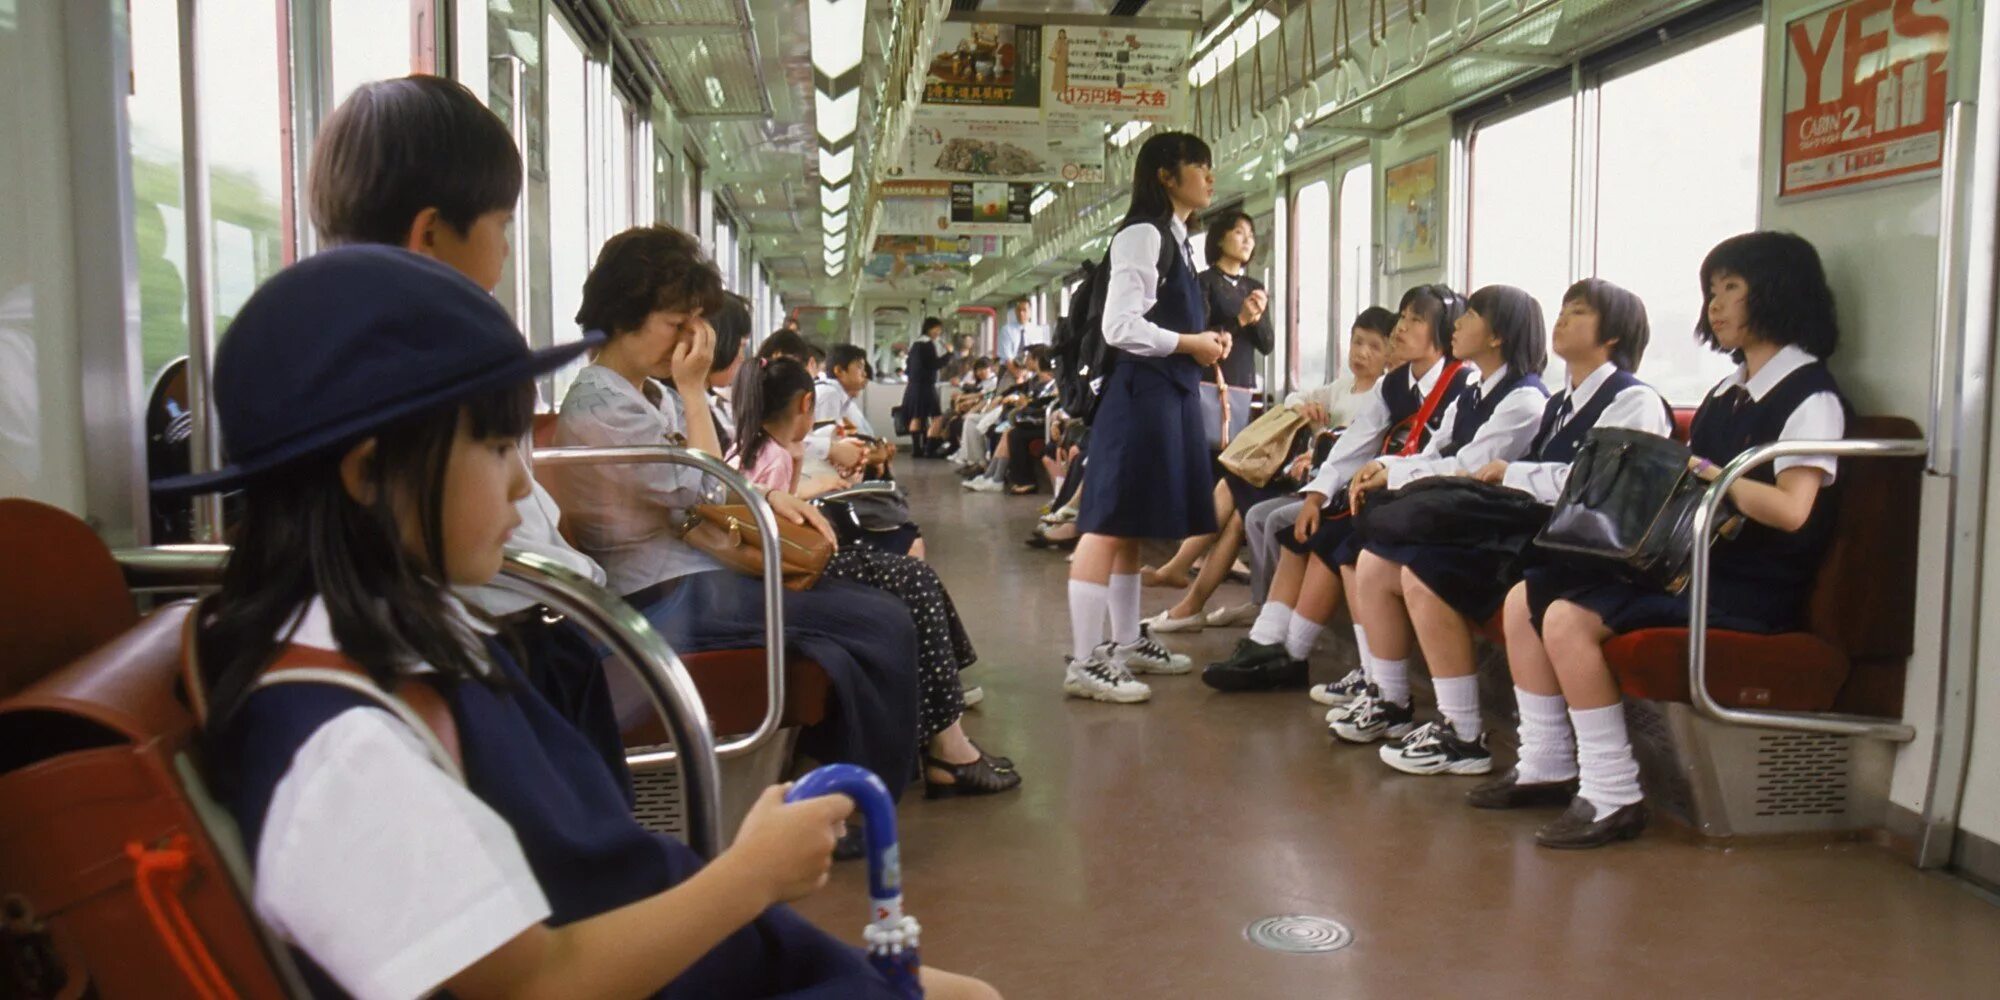 Лапают япония. Вагон метро Токио. Японцы в транспорте. Японские девушки в транспорте. Японцы в общественном транспорте.